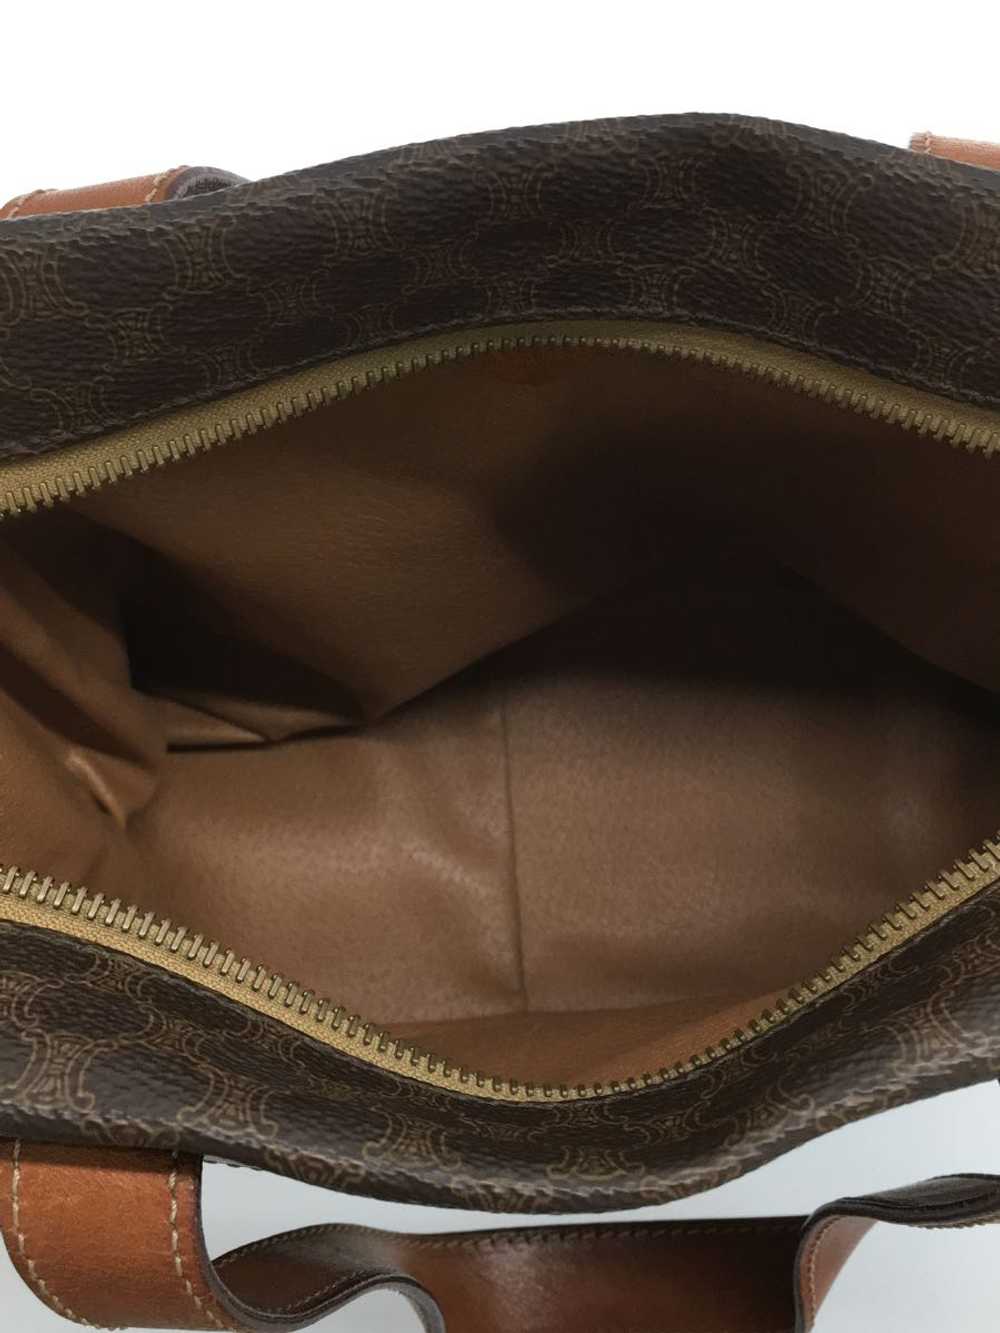 Used Celine Handbag/Pvc/Brw/ Bag - image 6